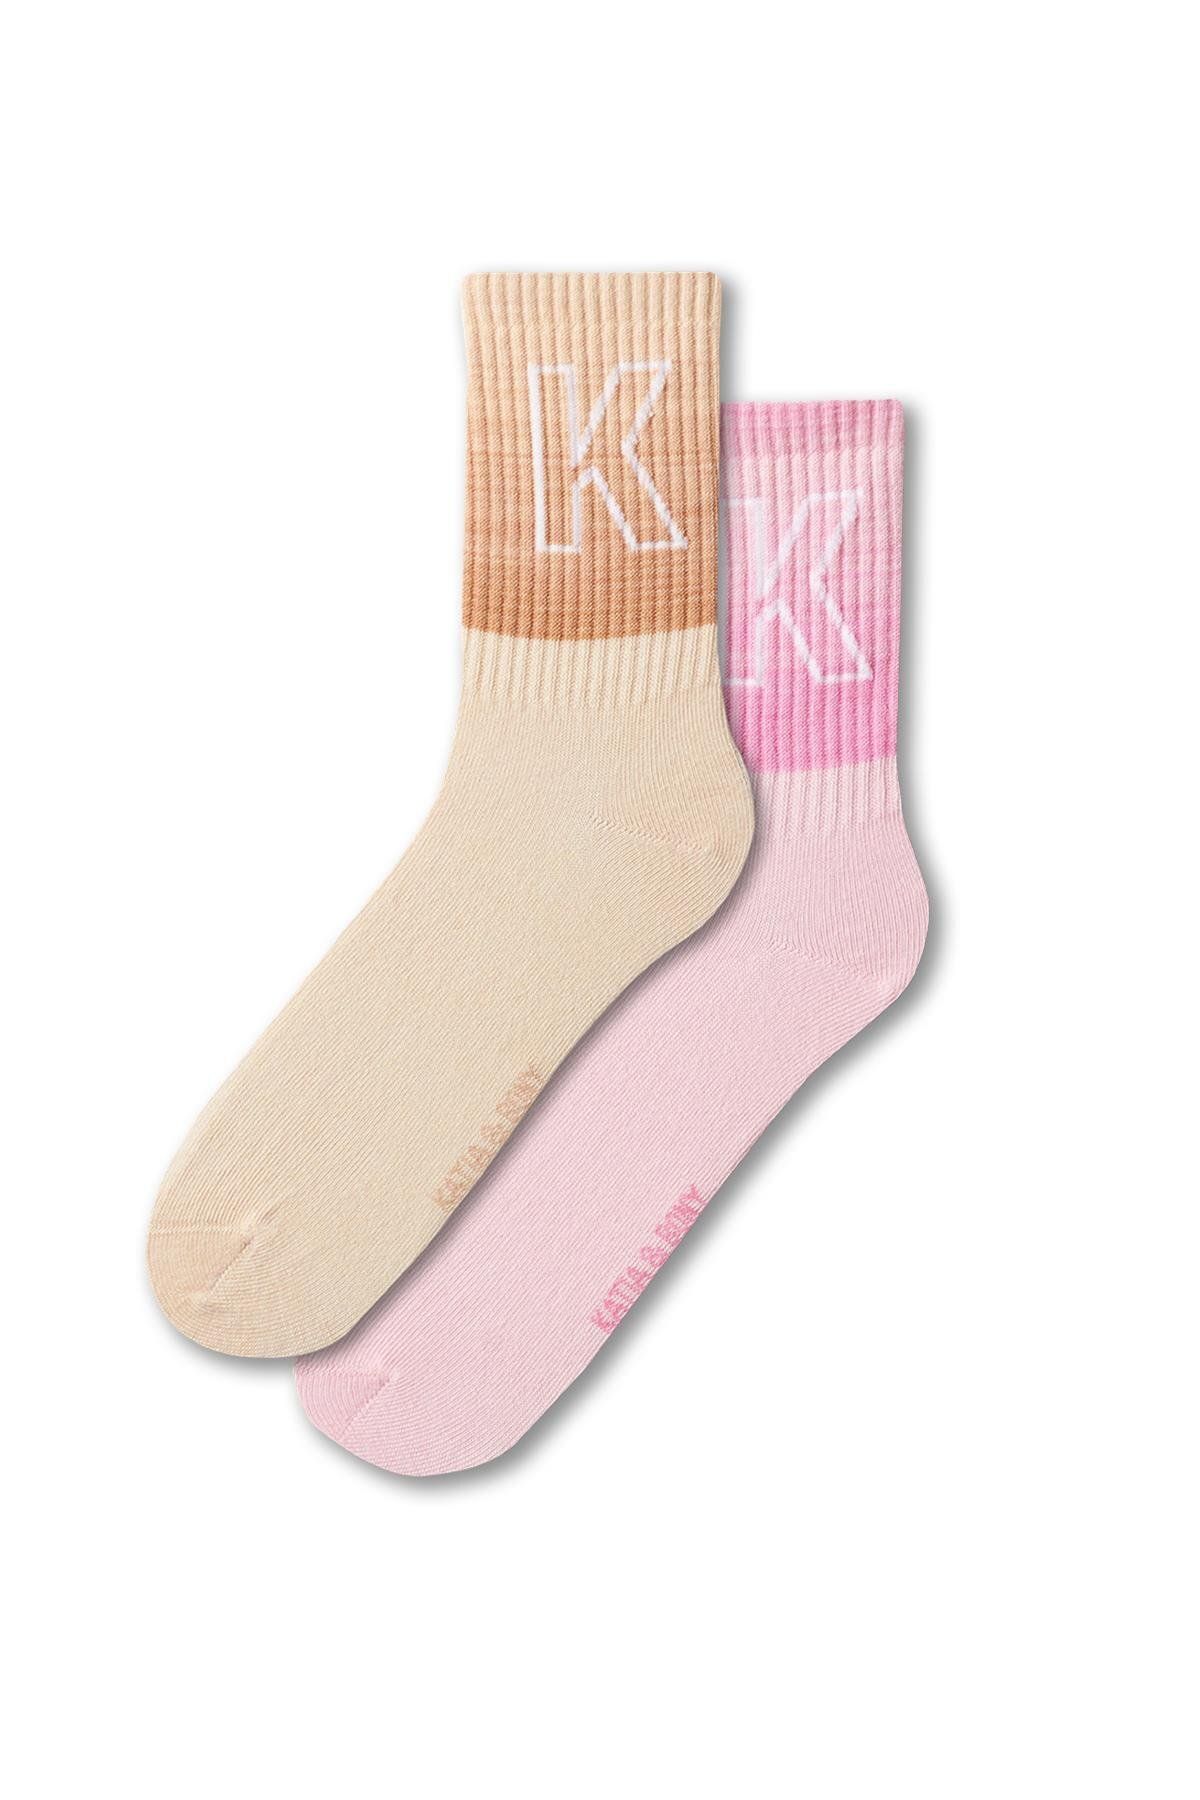 Katia & Bony Kadın Harf Desenli Renk Geçişli 2'li Soket Çorap